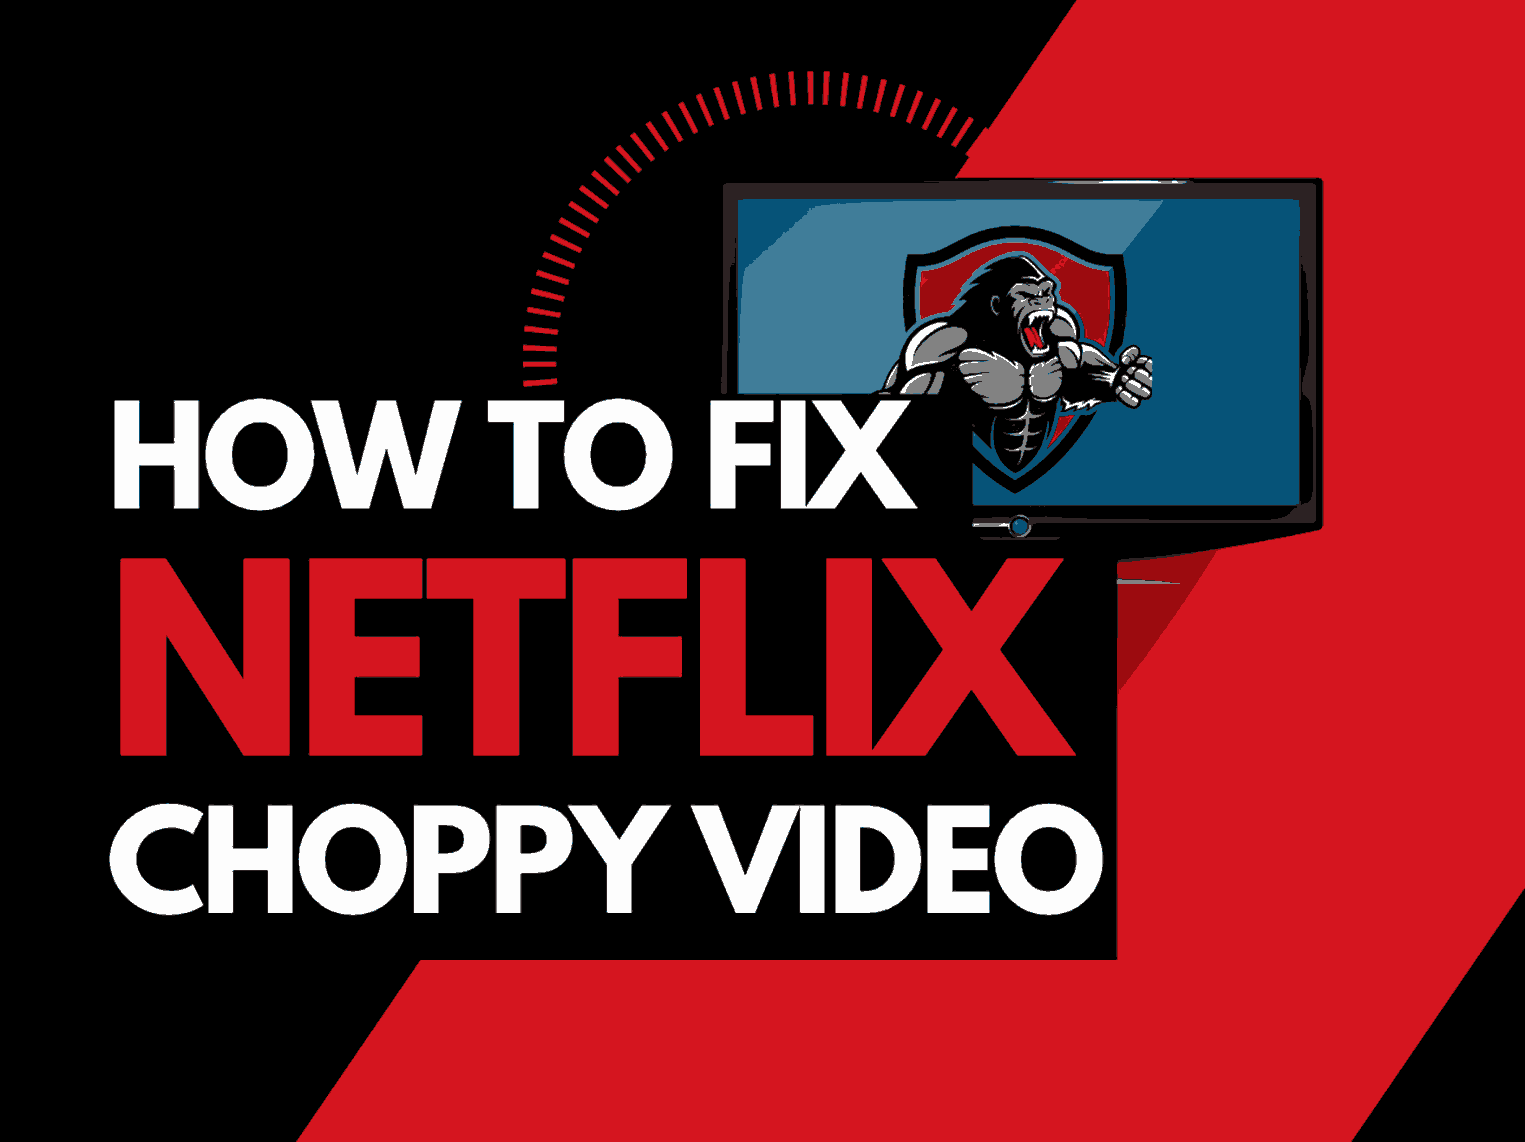 Netflix Choppy Video